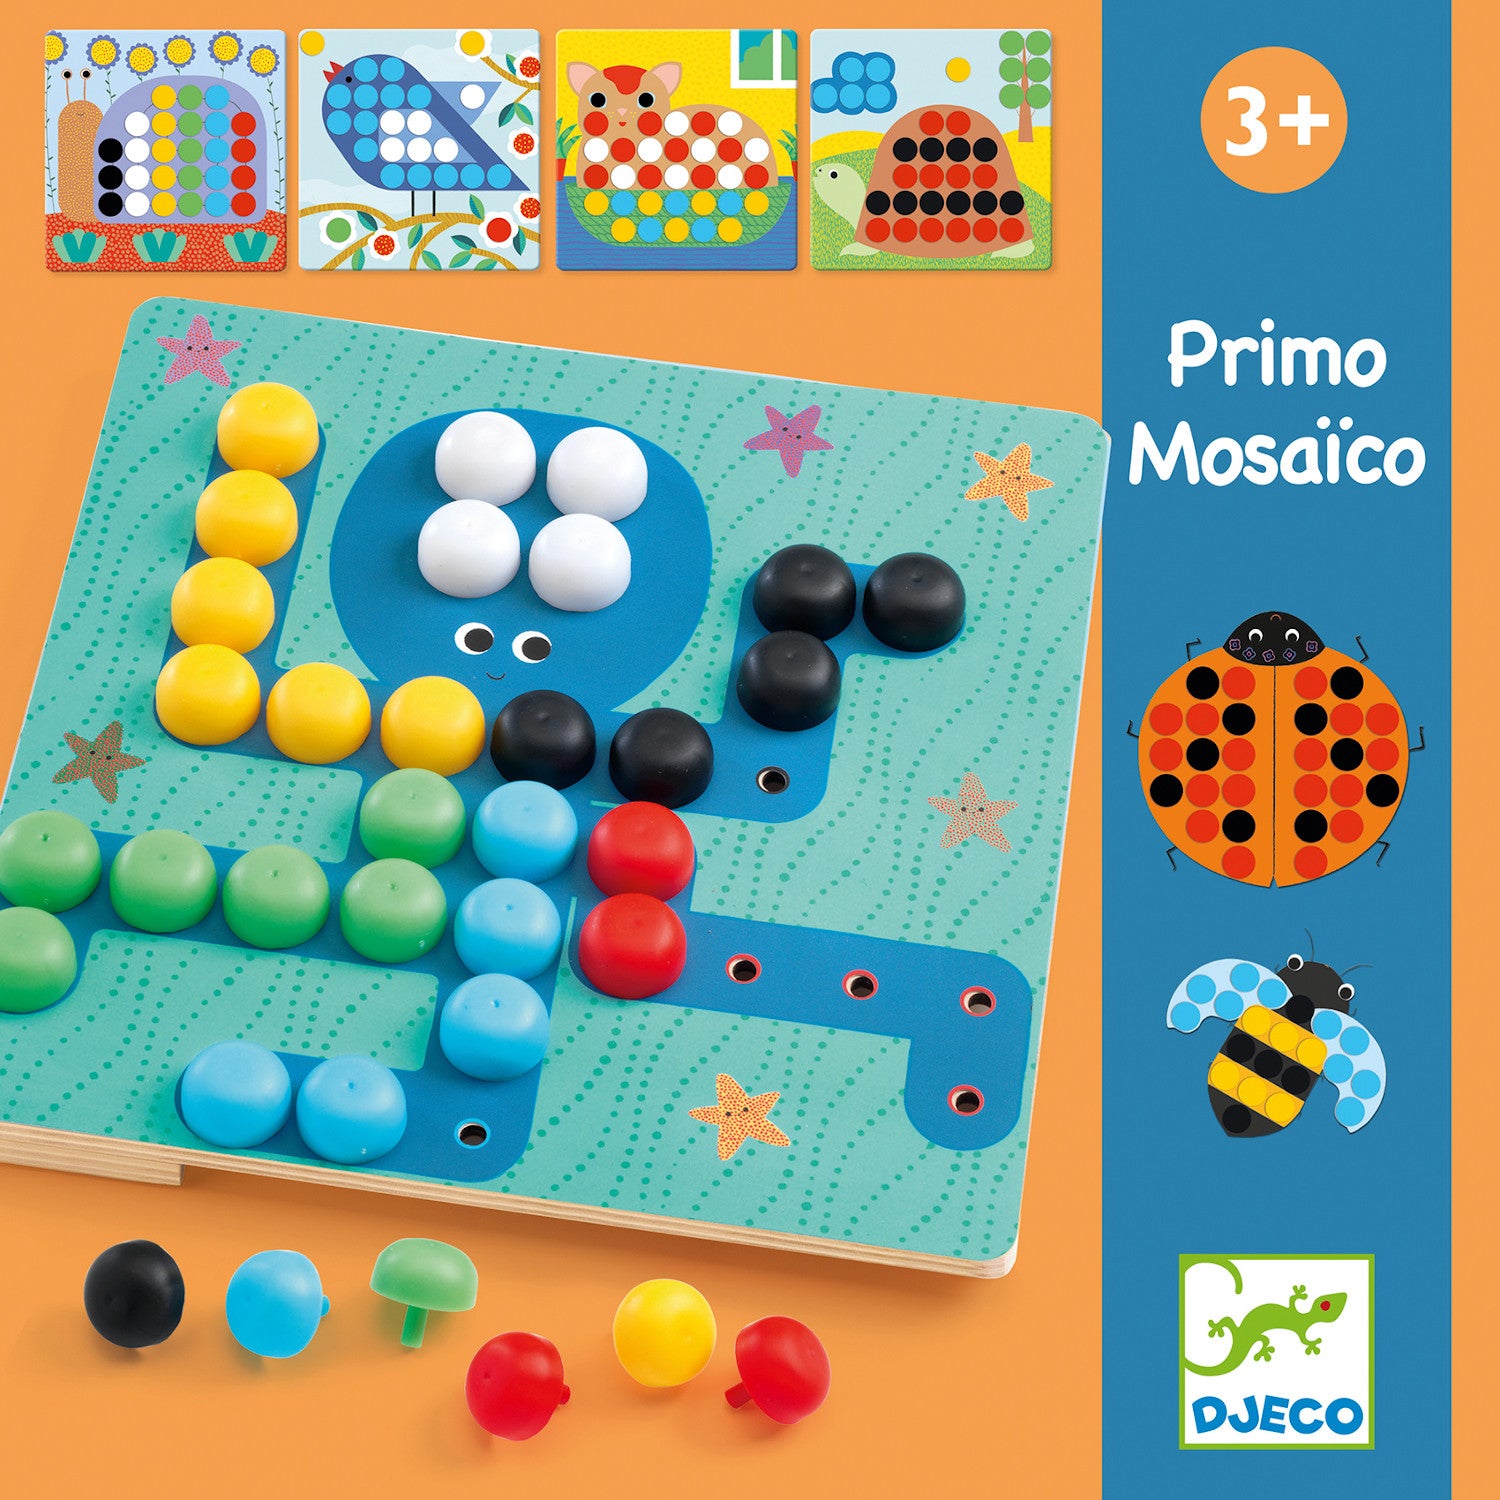 Djeco Primo Mosaico - Monkey Kids